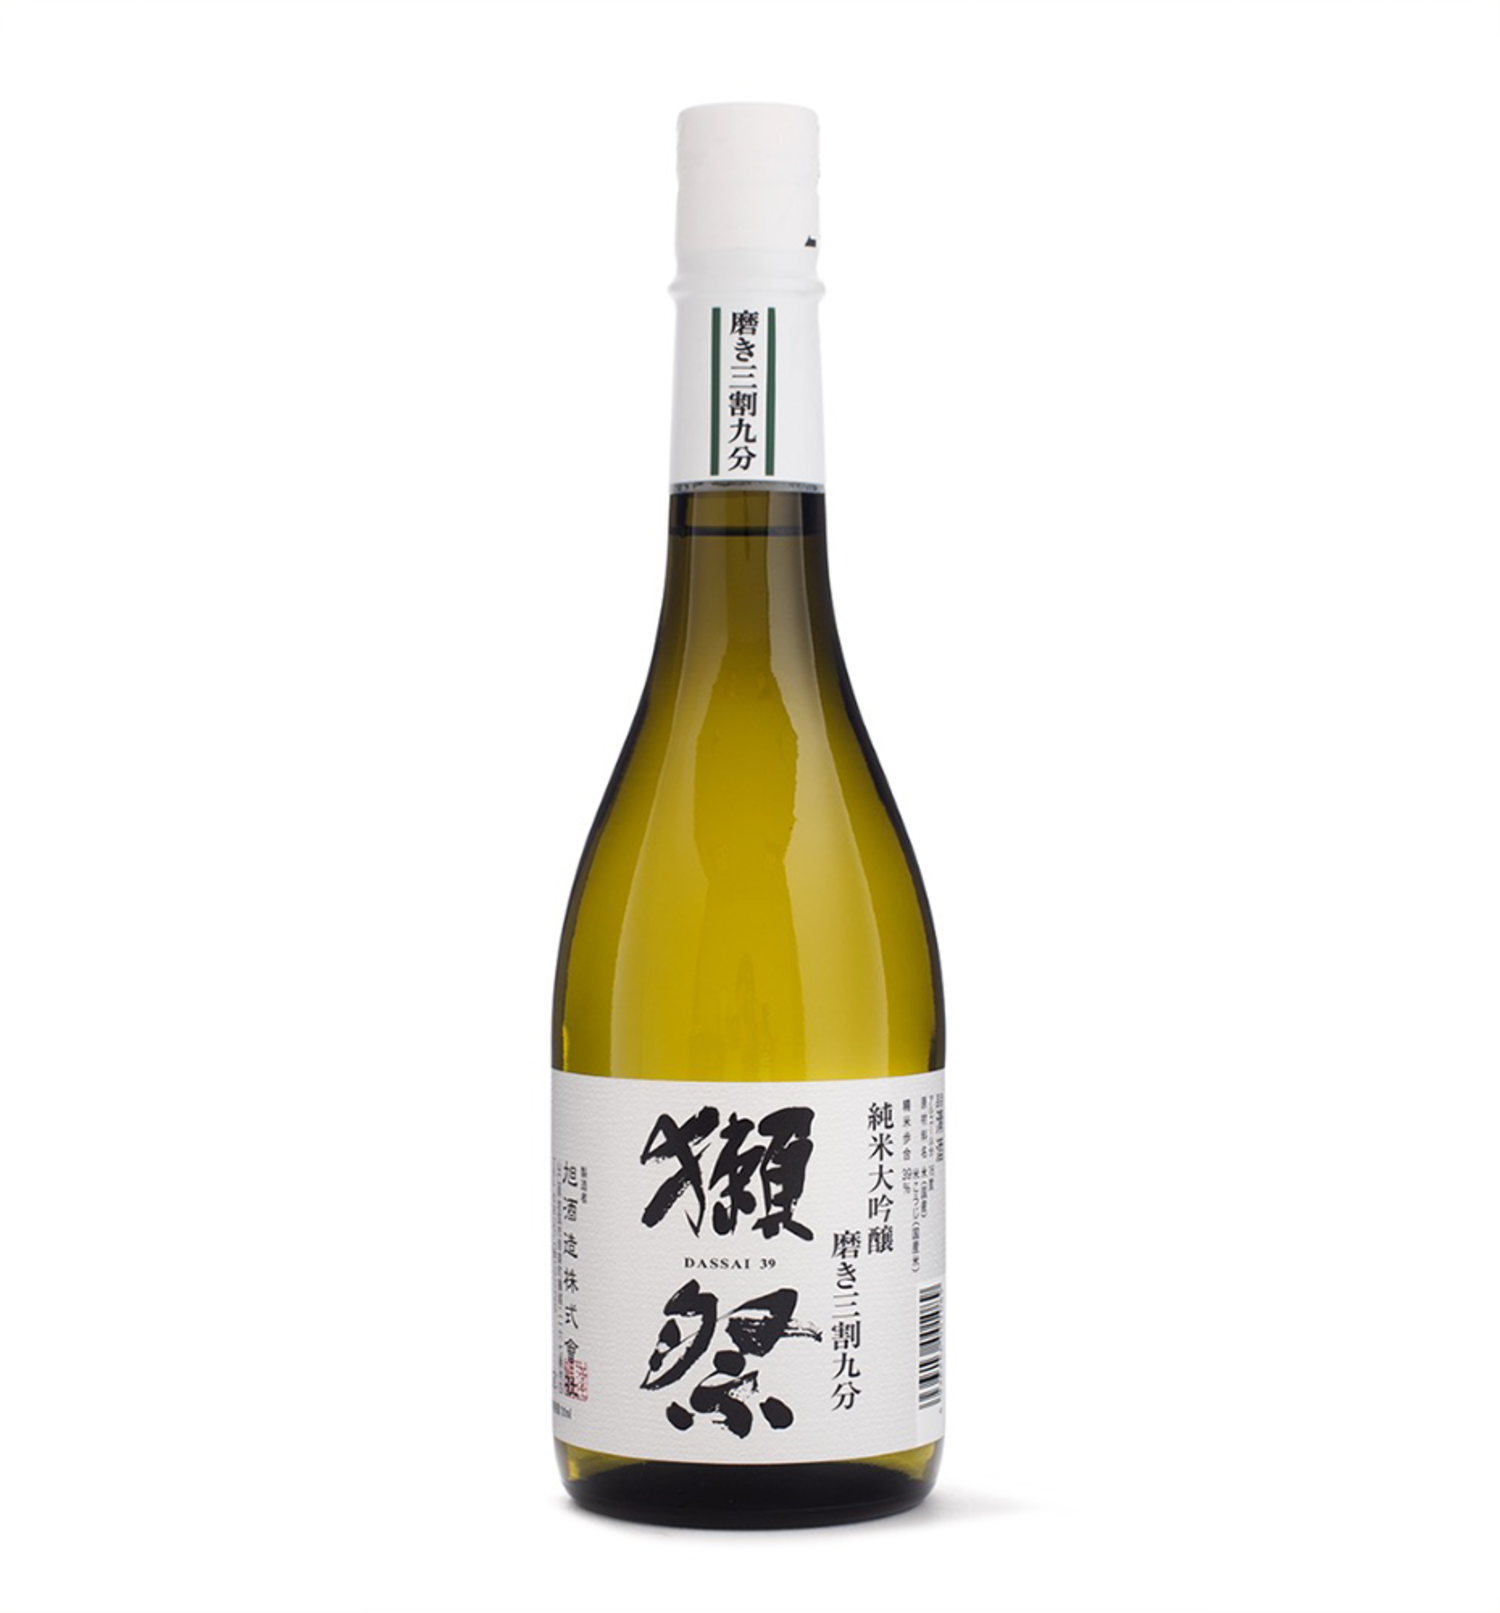 Dassai 39 Junmai Daiginjo Sake 獭祭纯米大吟釀720ml $37 FREE 